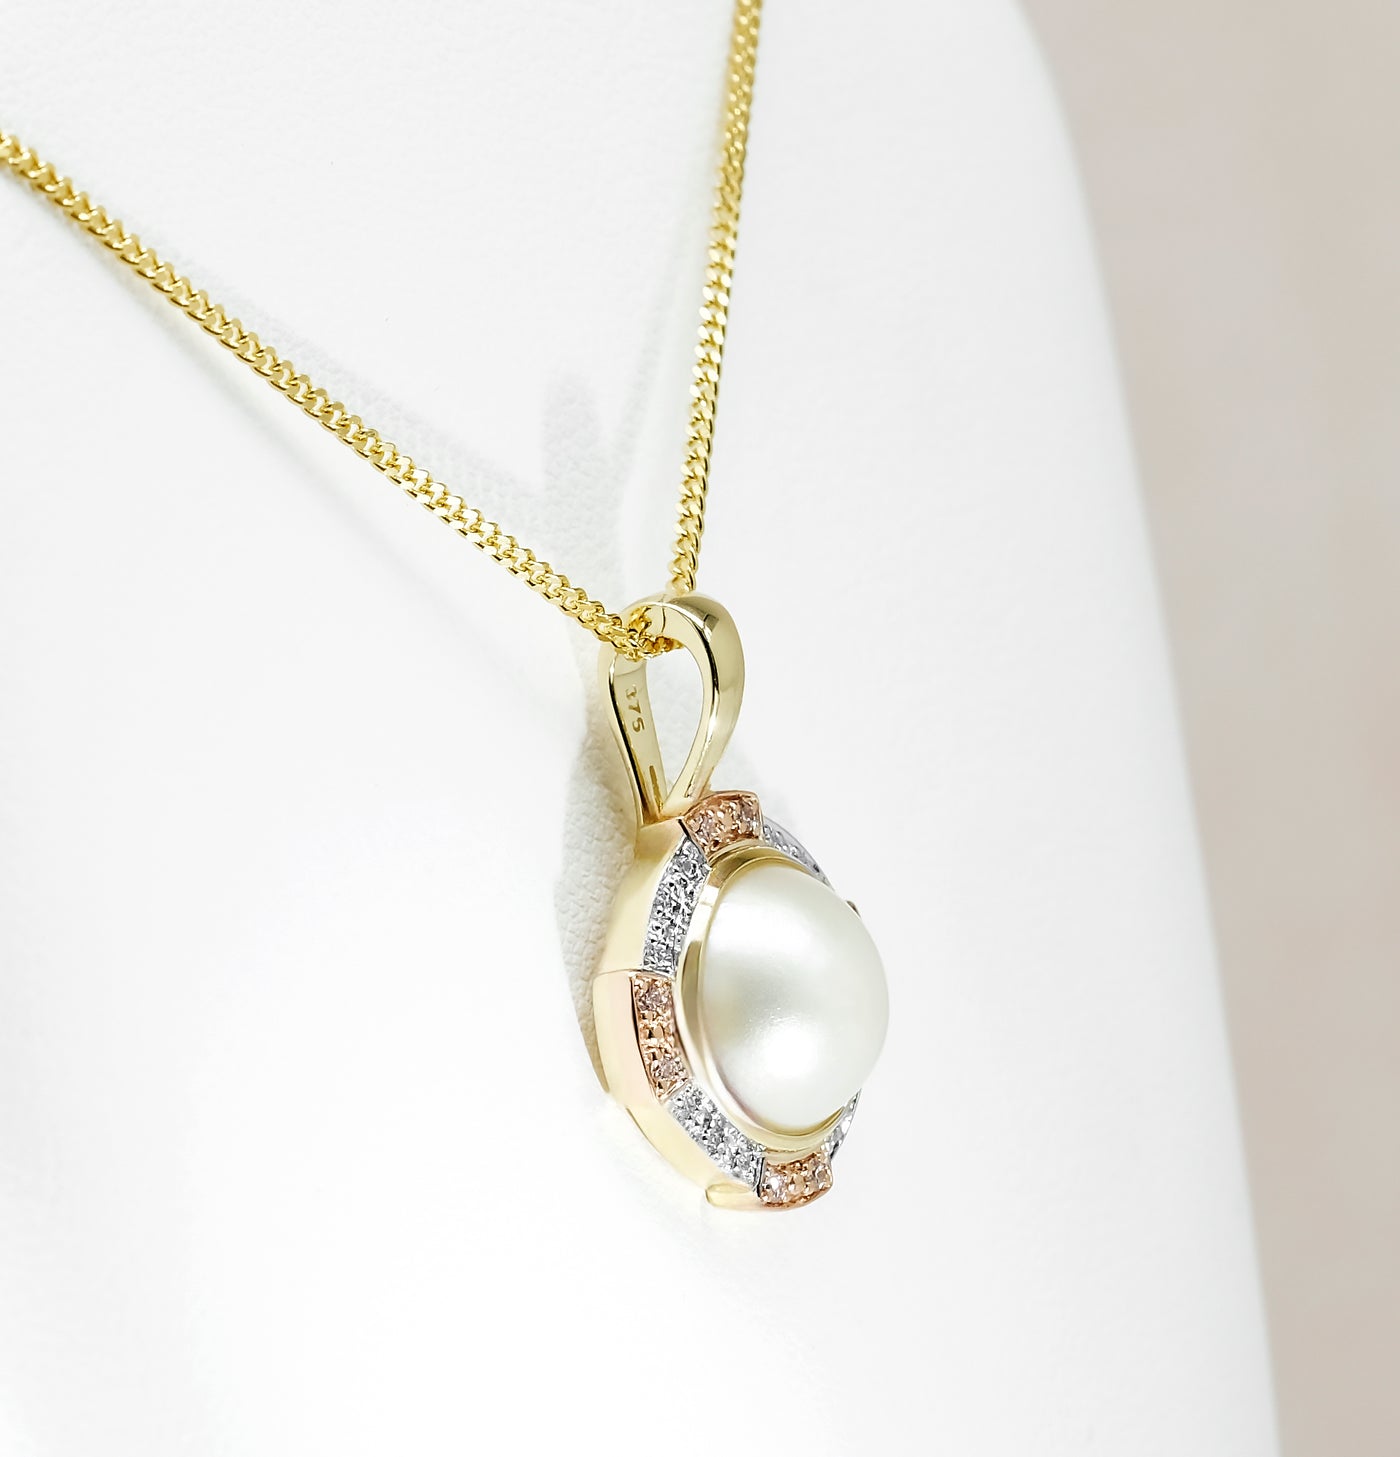 9K Yellow Gold Pearl & White, Pink Diamond Pendant